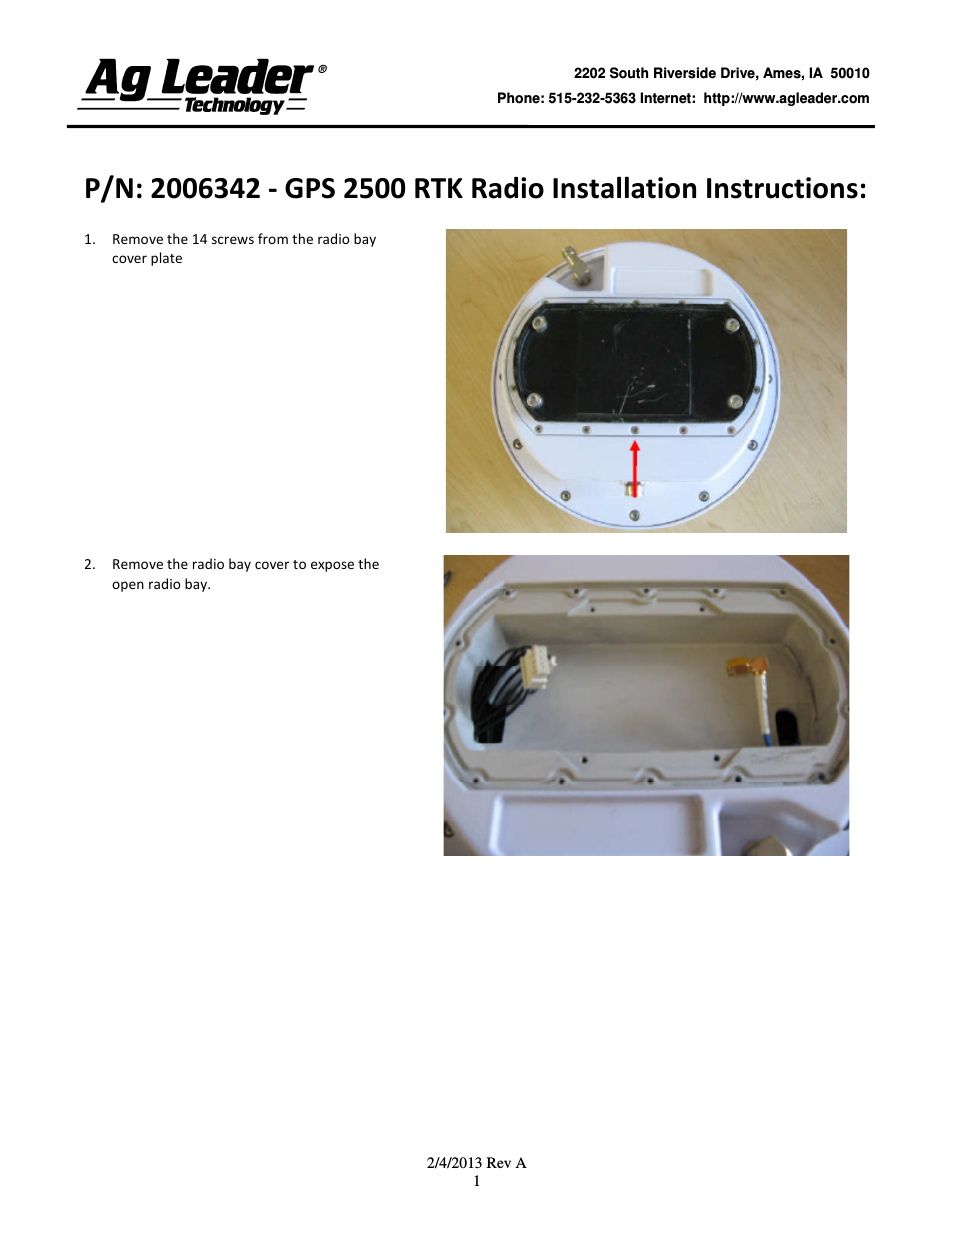 GPS 2500 RTK Radio Installation Instructions